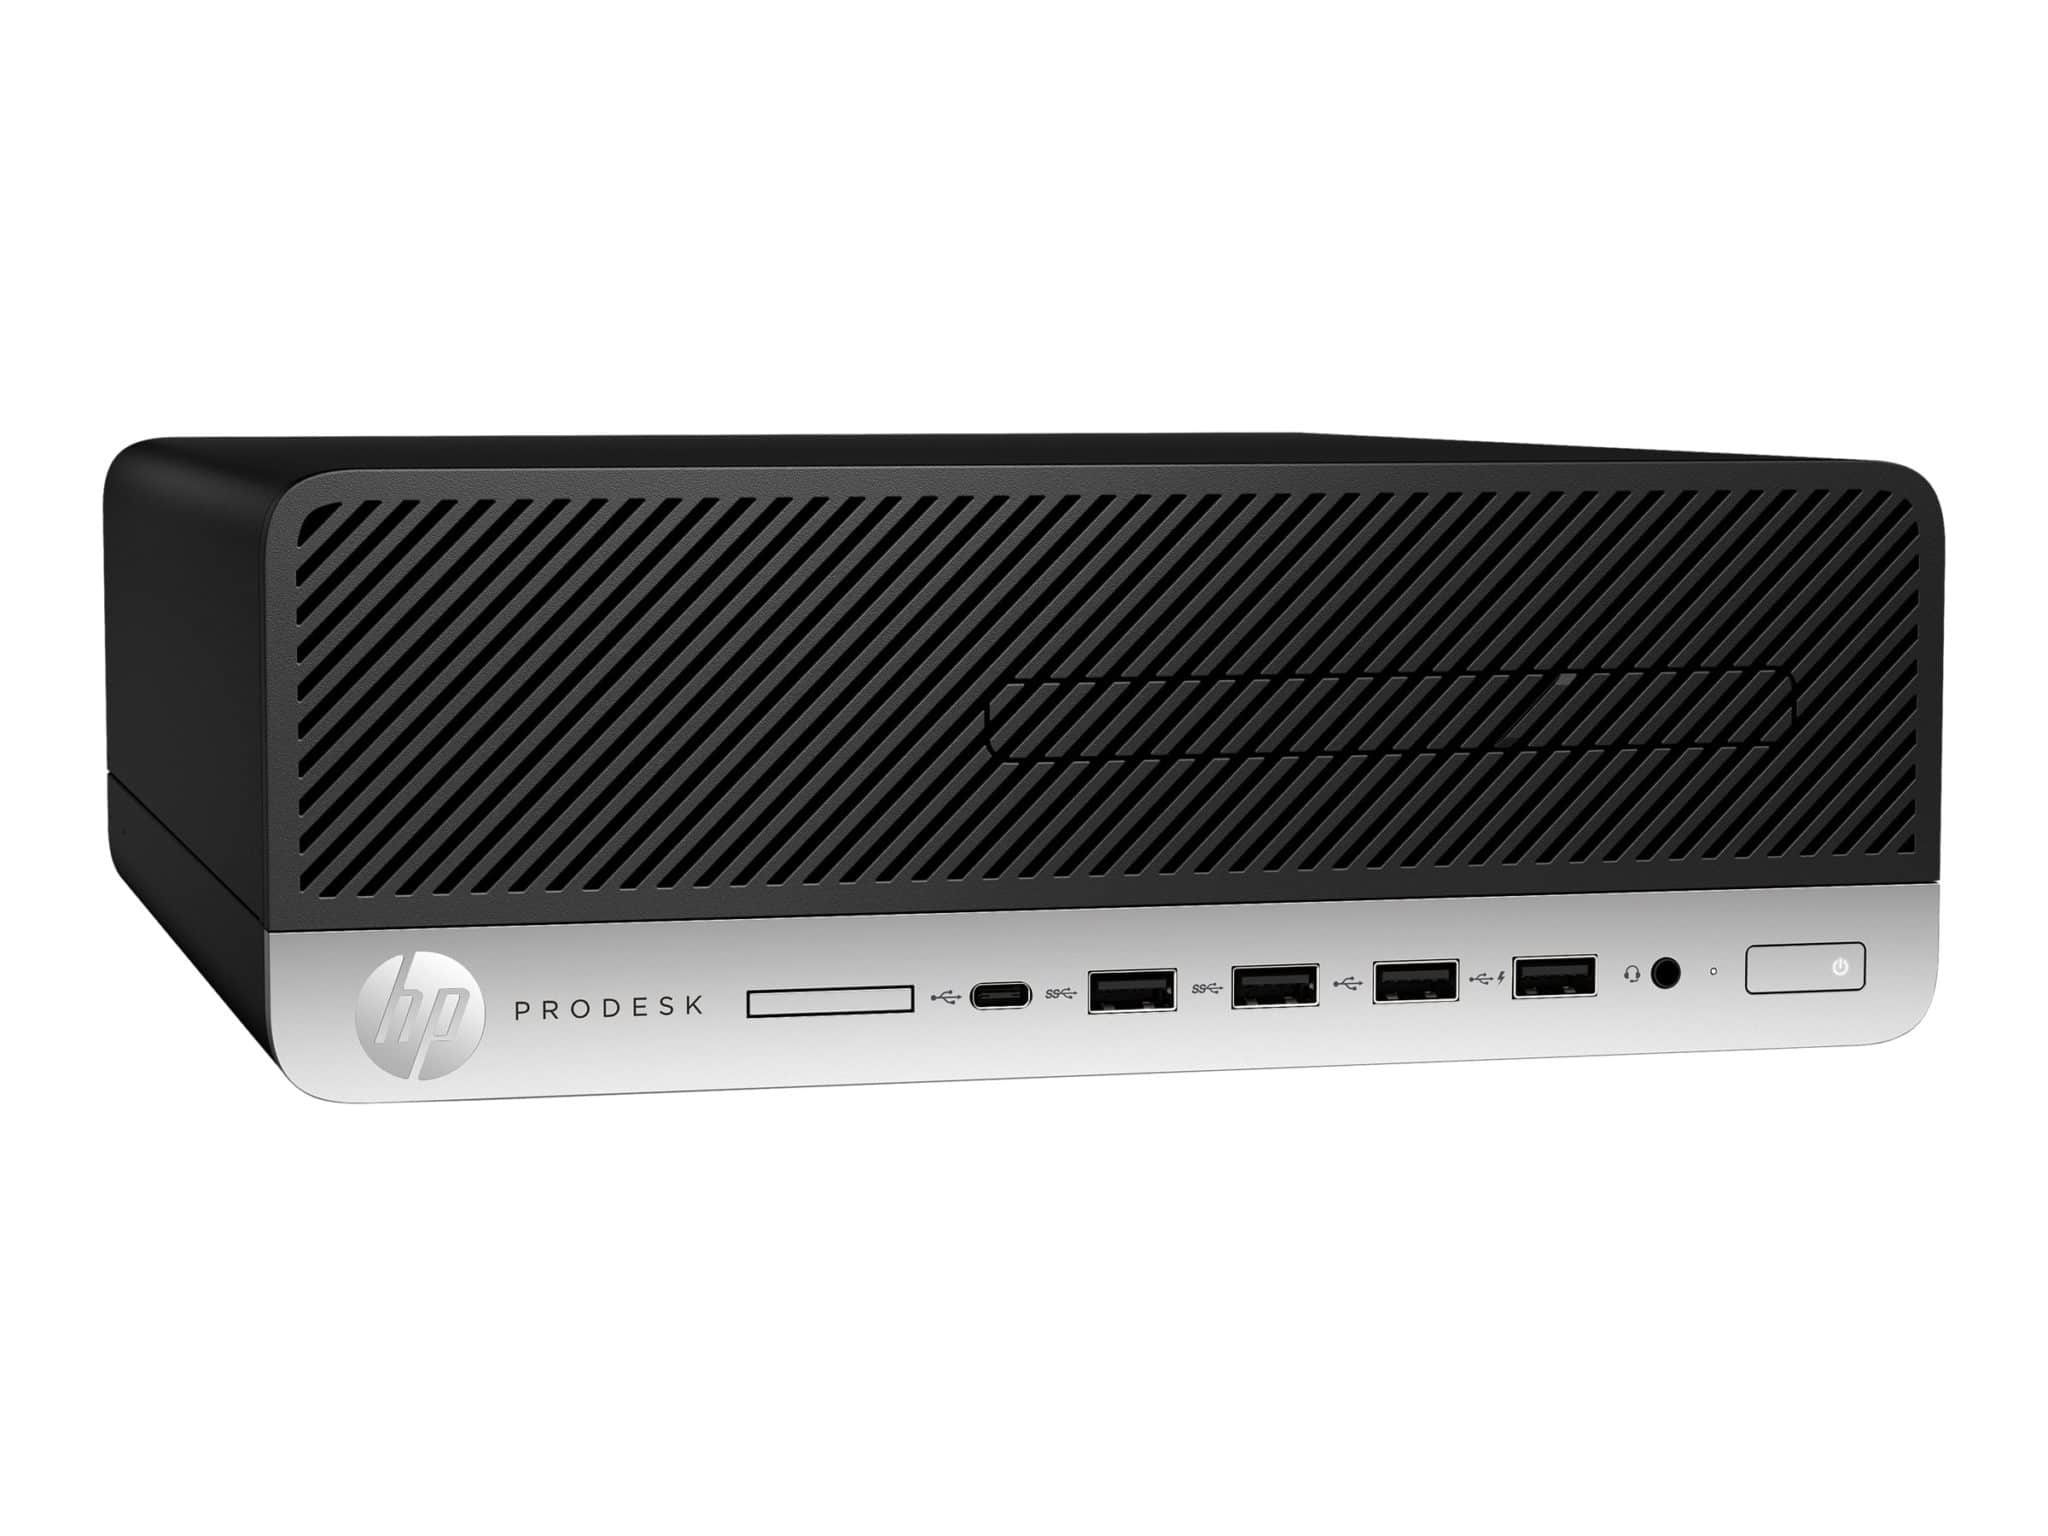 HP ProDesk 600 G6 - Smart Buy - Core i5 10500 3 GHz 8GB Desktop